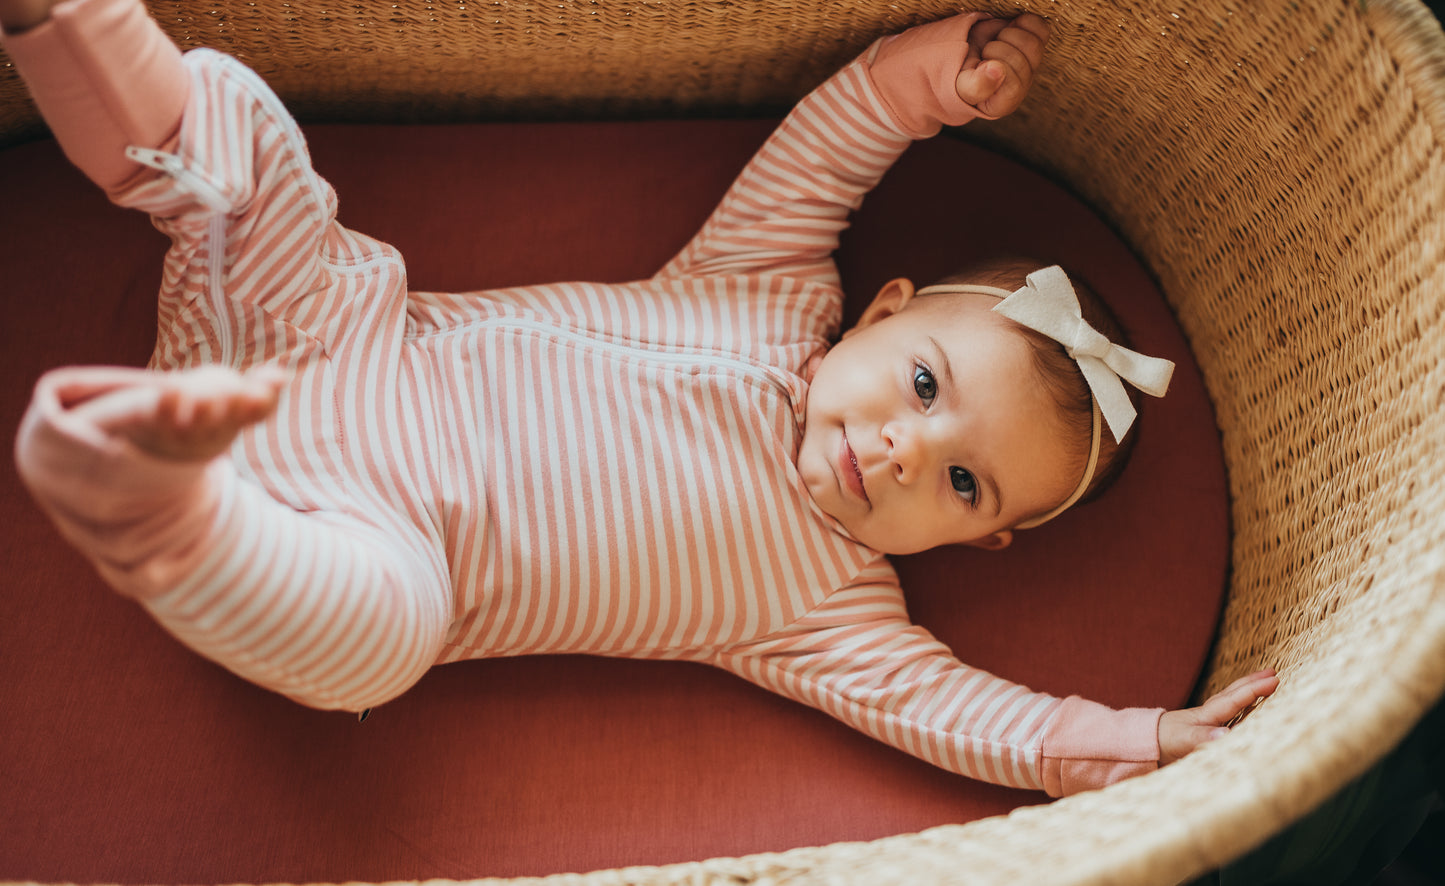 Double Zipper Bamboo Baby Sleeper | Pink Stripe - One Kind Clothing, LLC